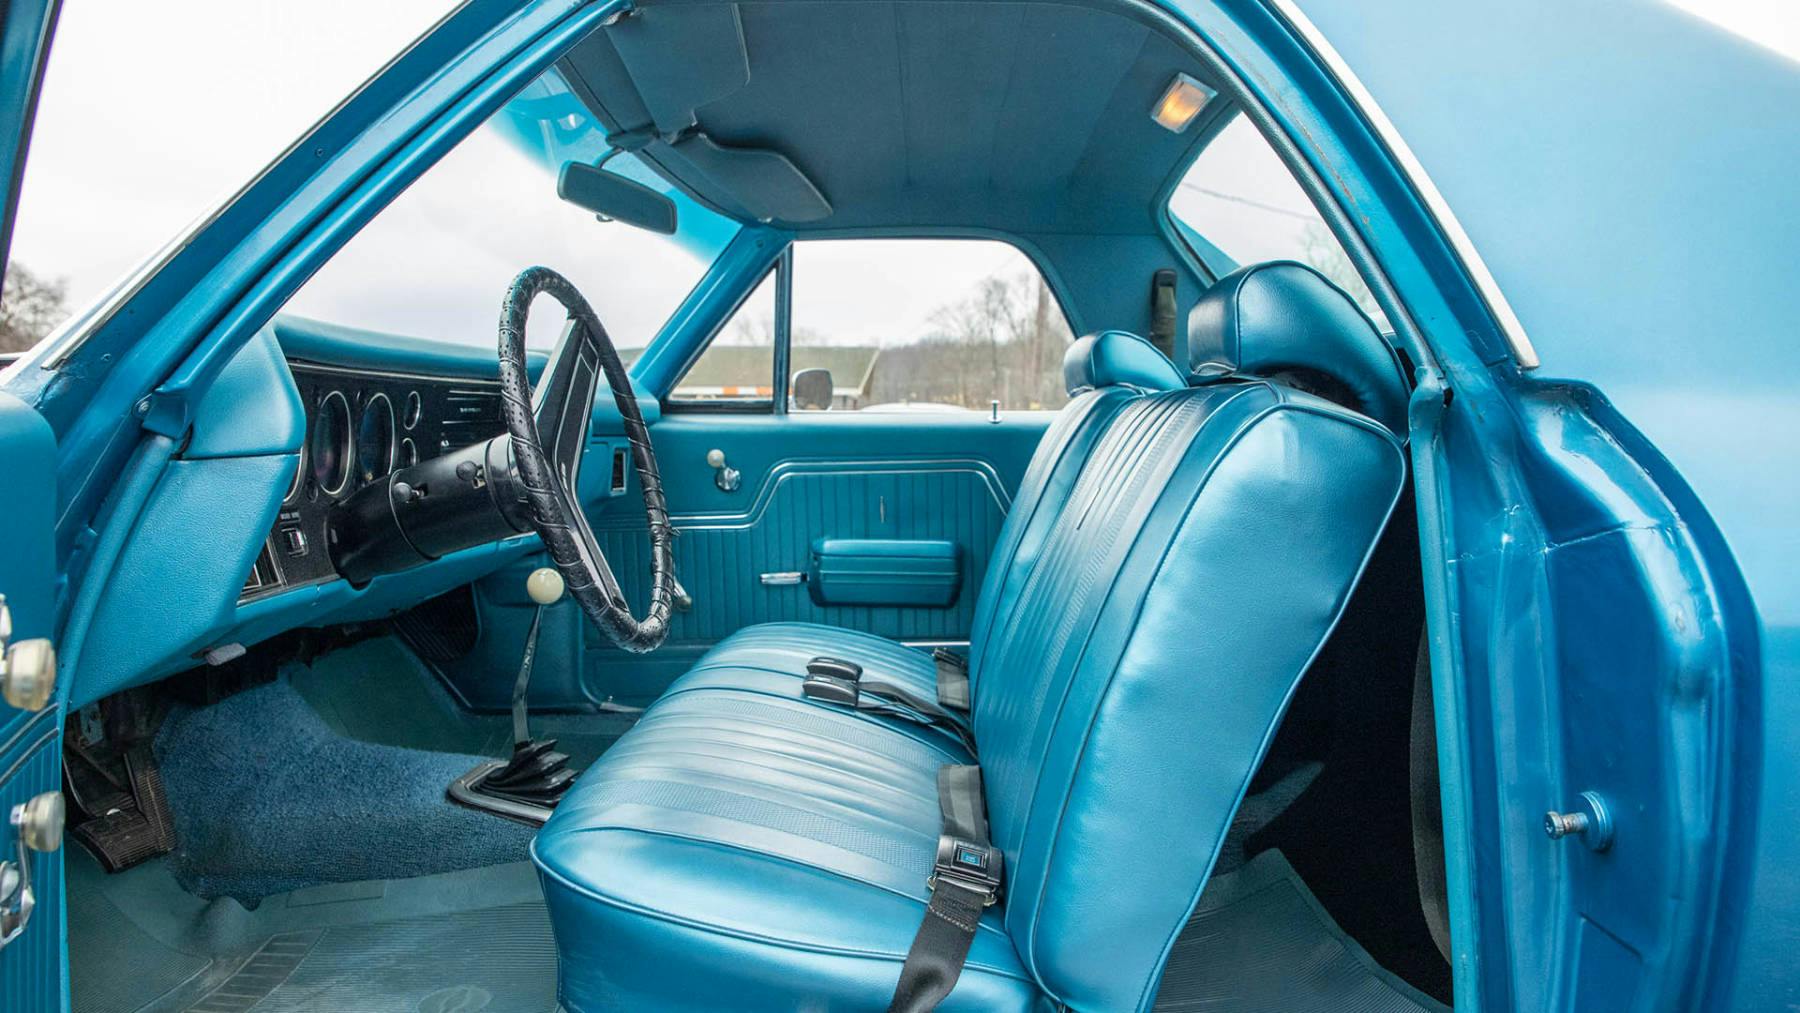 1970 Chevrolet El Camino SS 396 interior side